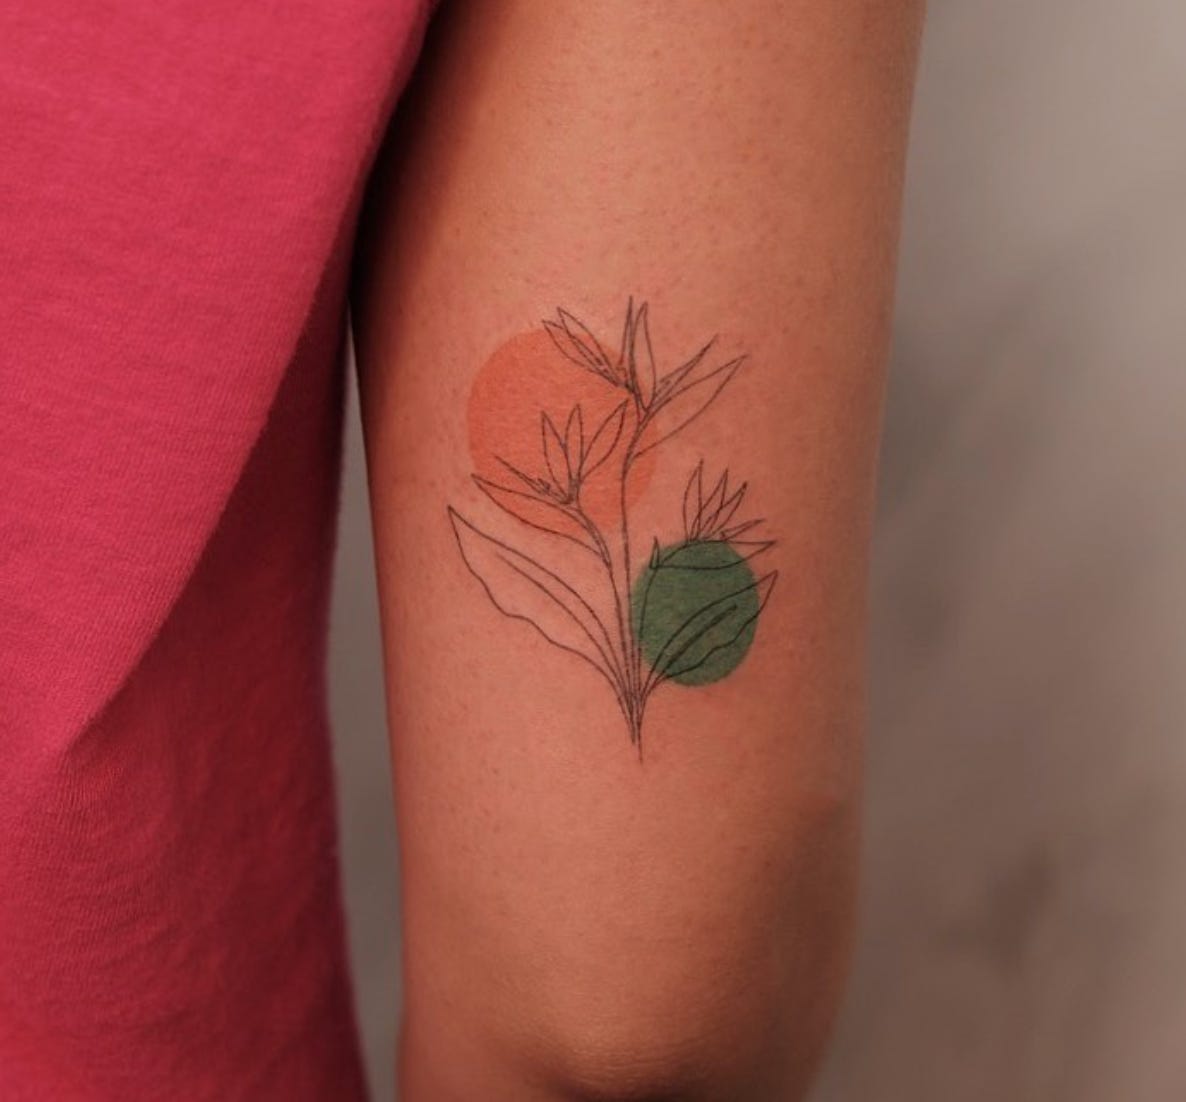 Fine Line Tattoos in Miami Discover the Elegance at Lumia Tattoo Shop